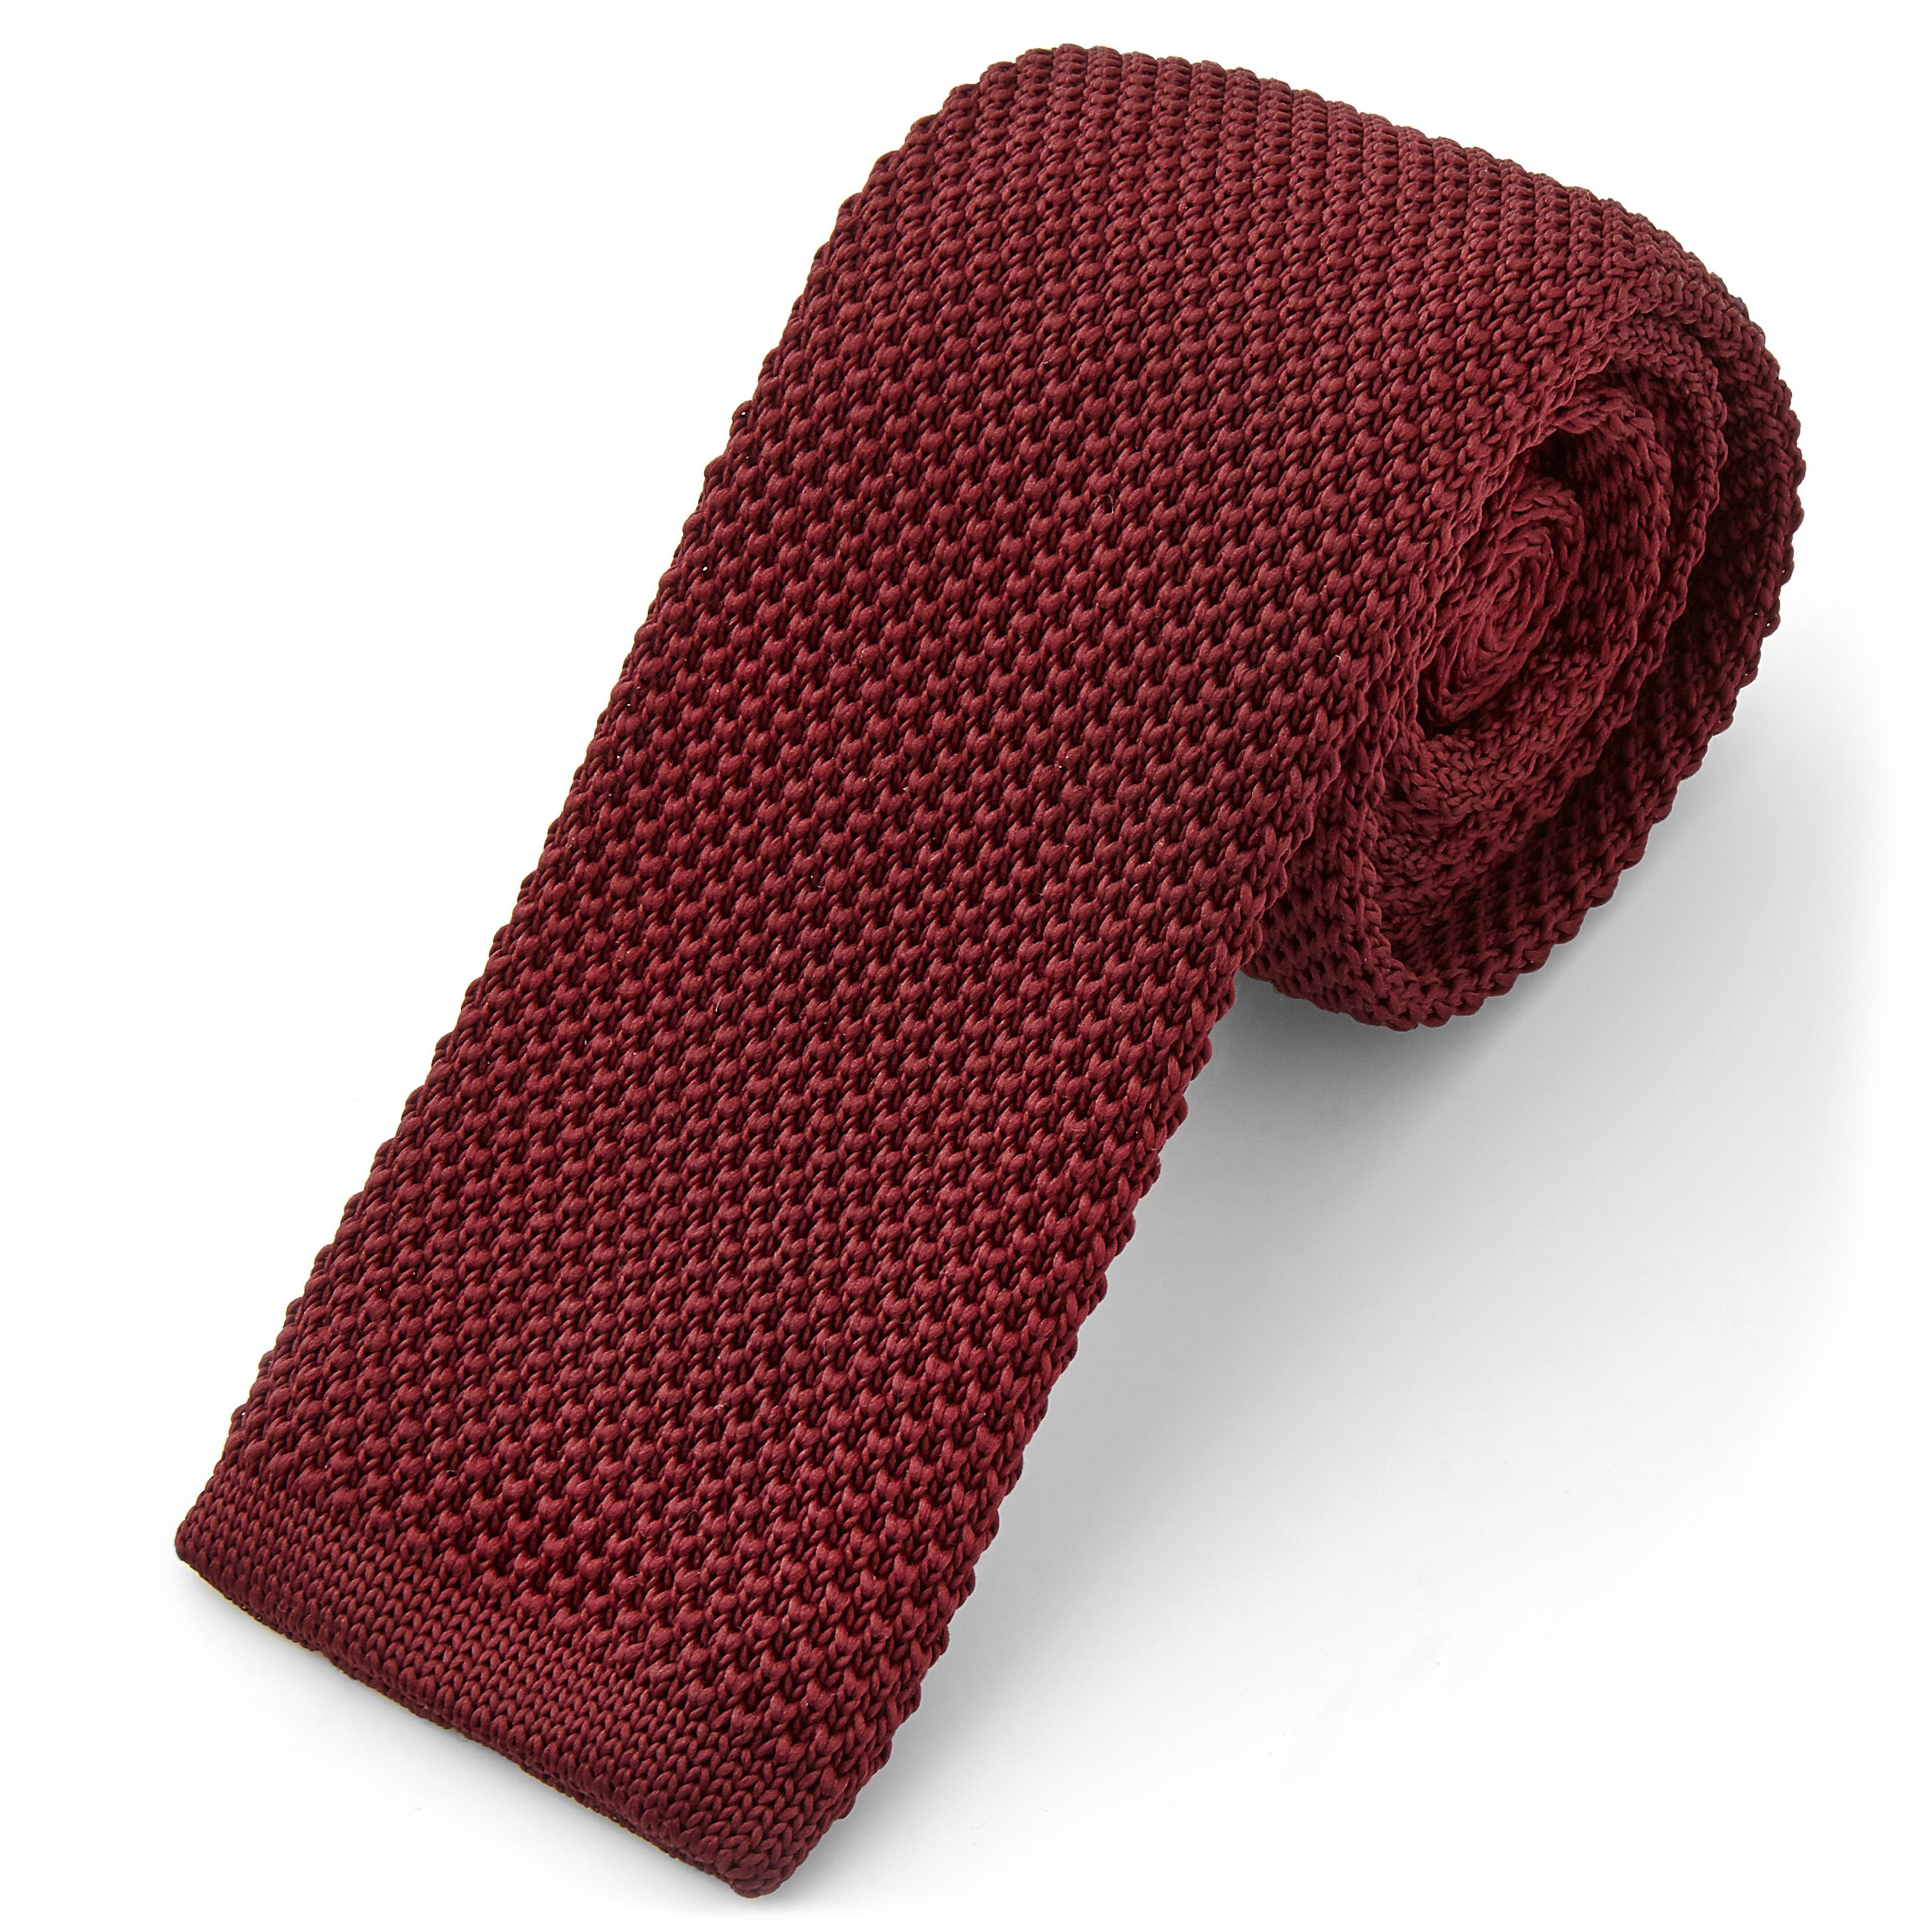 Rijke mahoniehoutkleurige gebreide stropdas